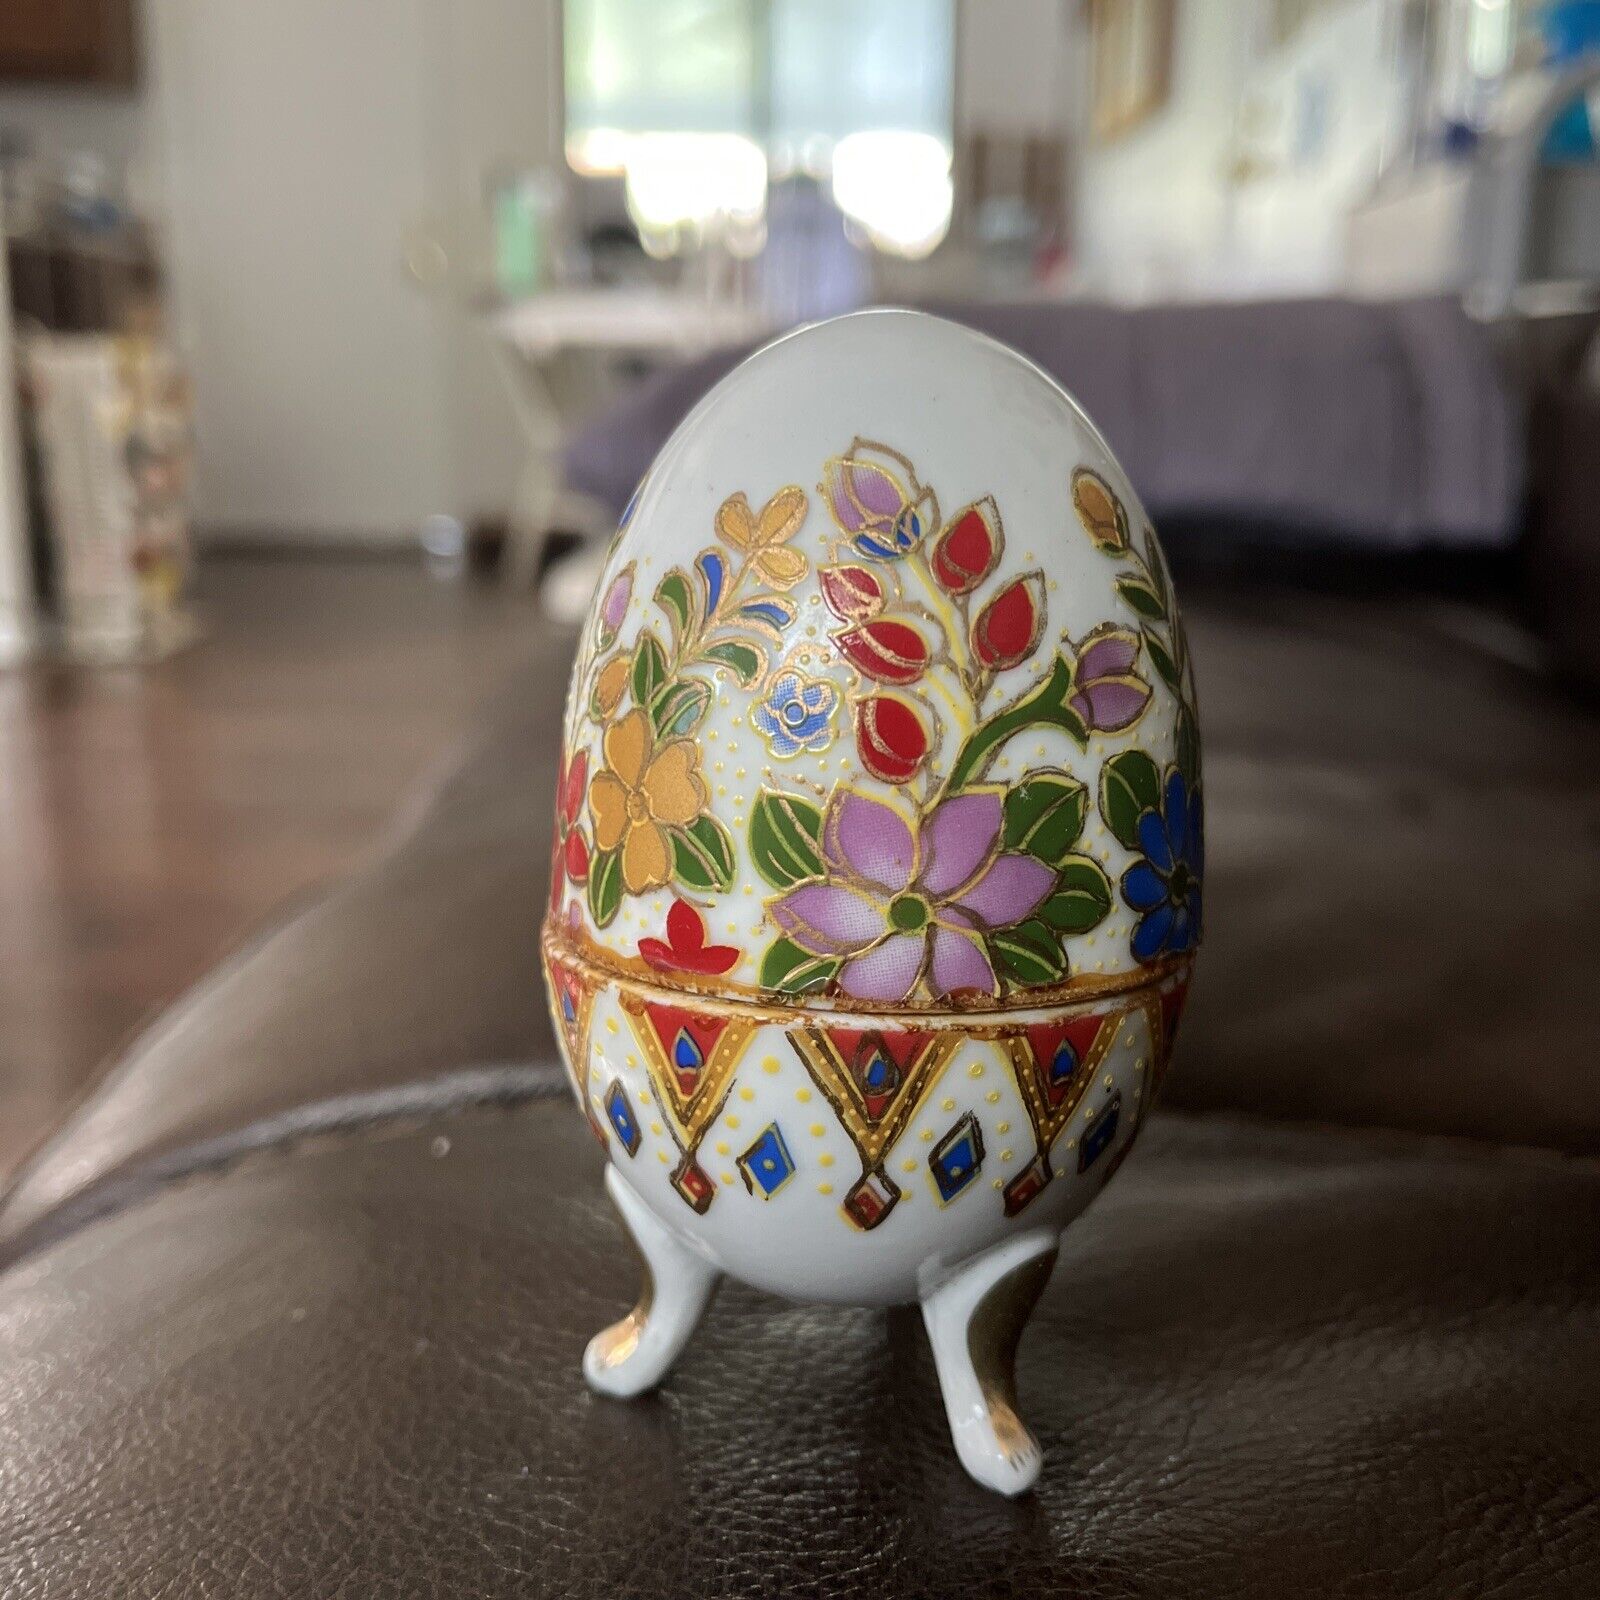 Vintage Decorated Soft Boiled Egg Holder Cup Hand Painted? Porcelain Flowers